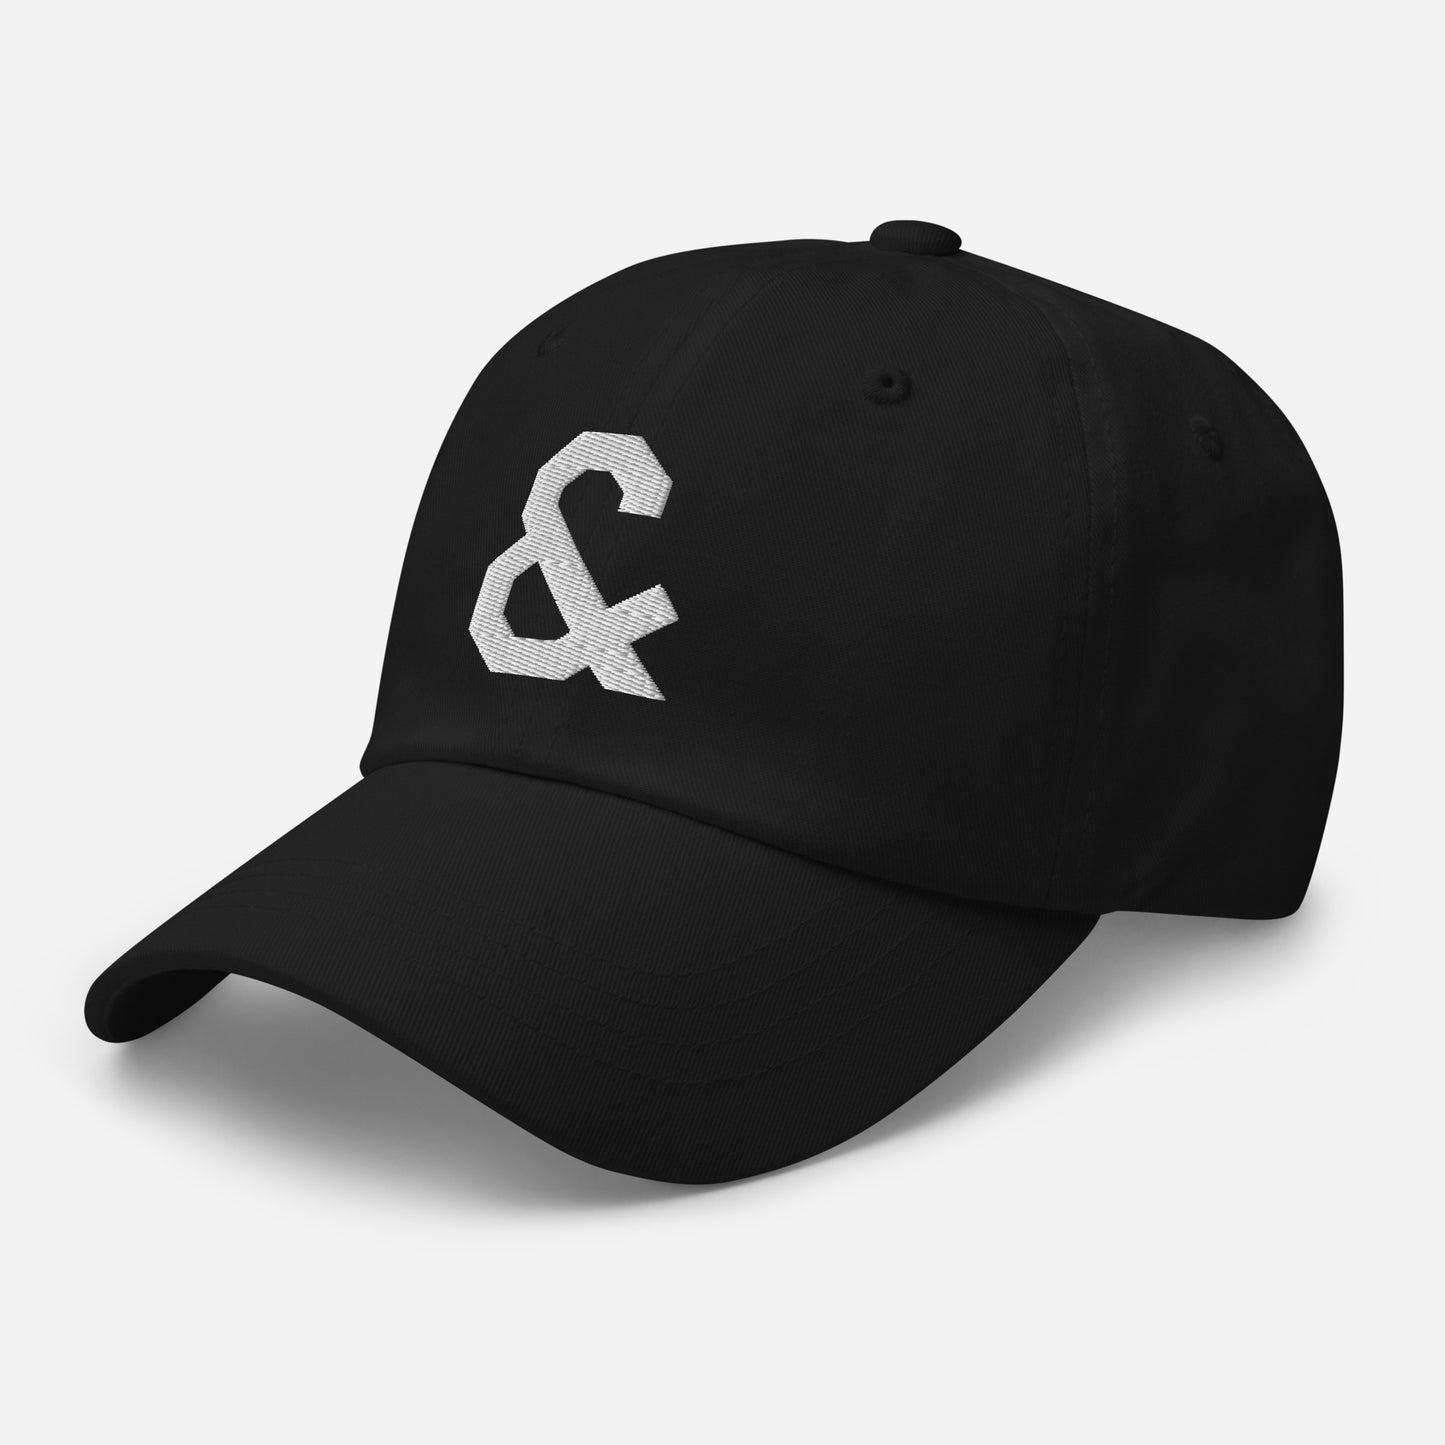 Ampersand Embroidered Dad hat